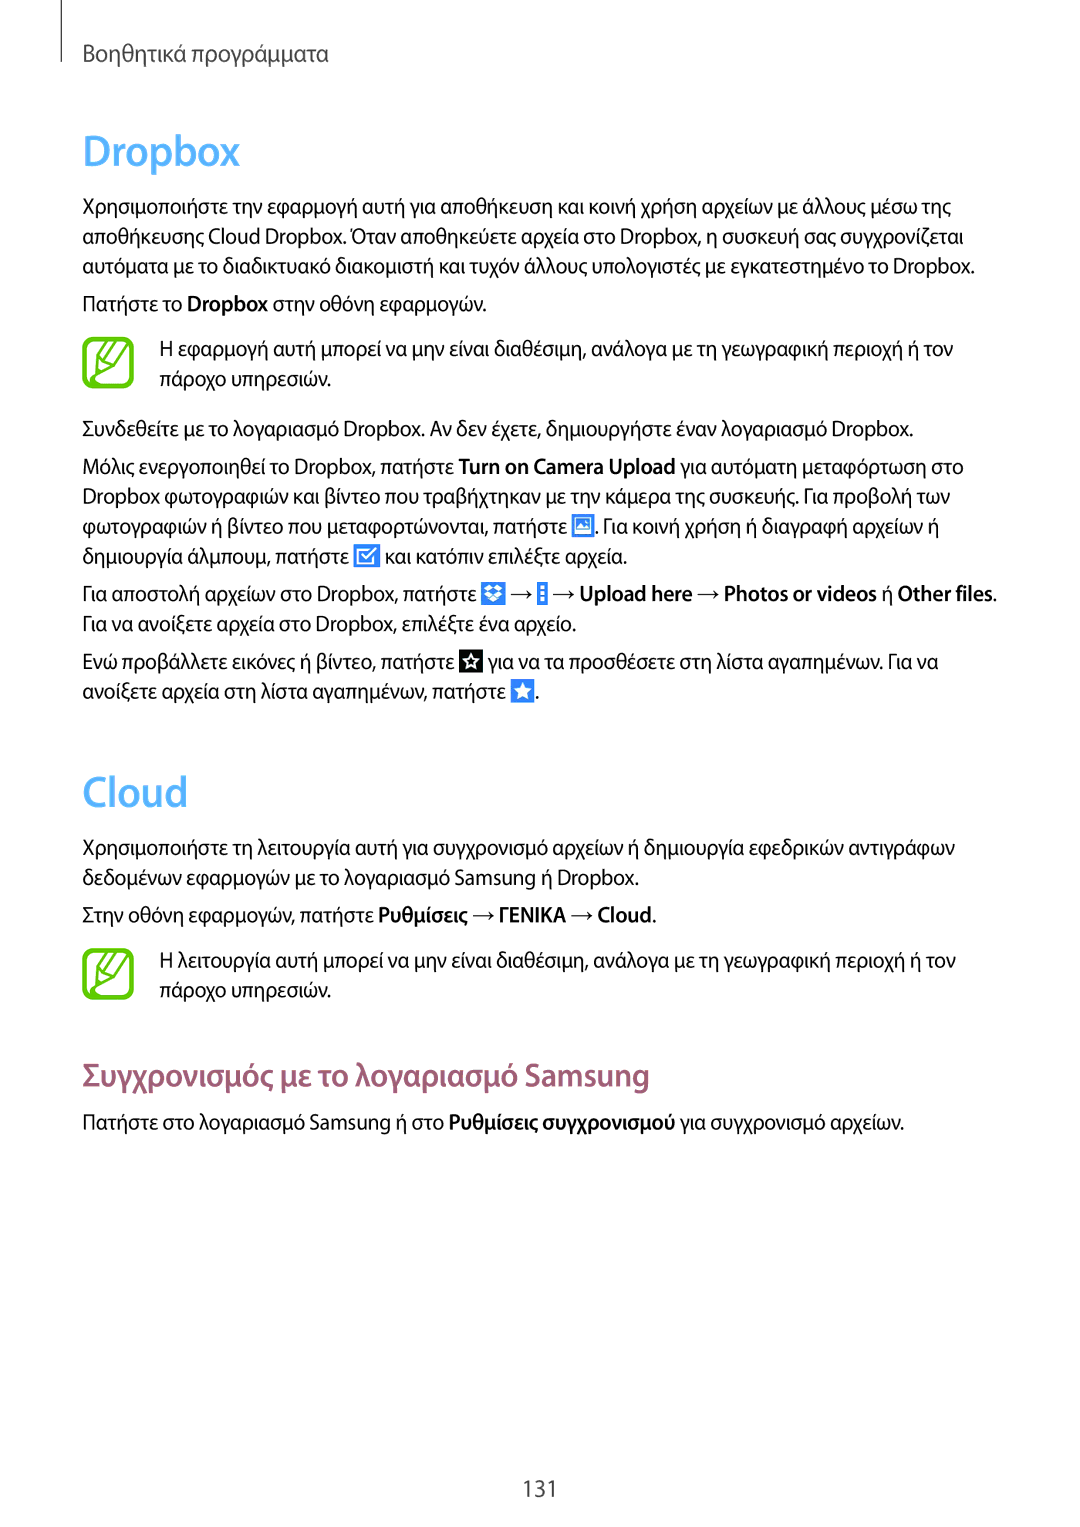 Samsung SM-P9050ZKAEUR, SM-P9050ZWAEUR, SM-P9050ZWYEUR, SM-P9050ZKYEUR Dropbox, Cloud, Συγχρονισμός με το λογαριασμό Samsung 